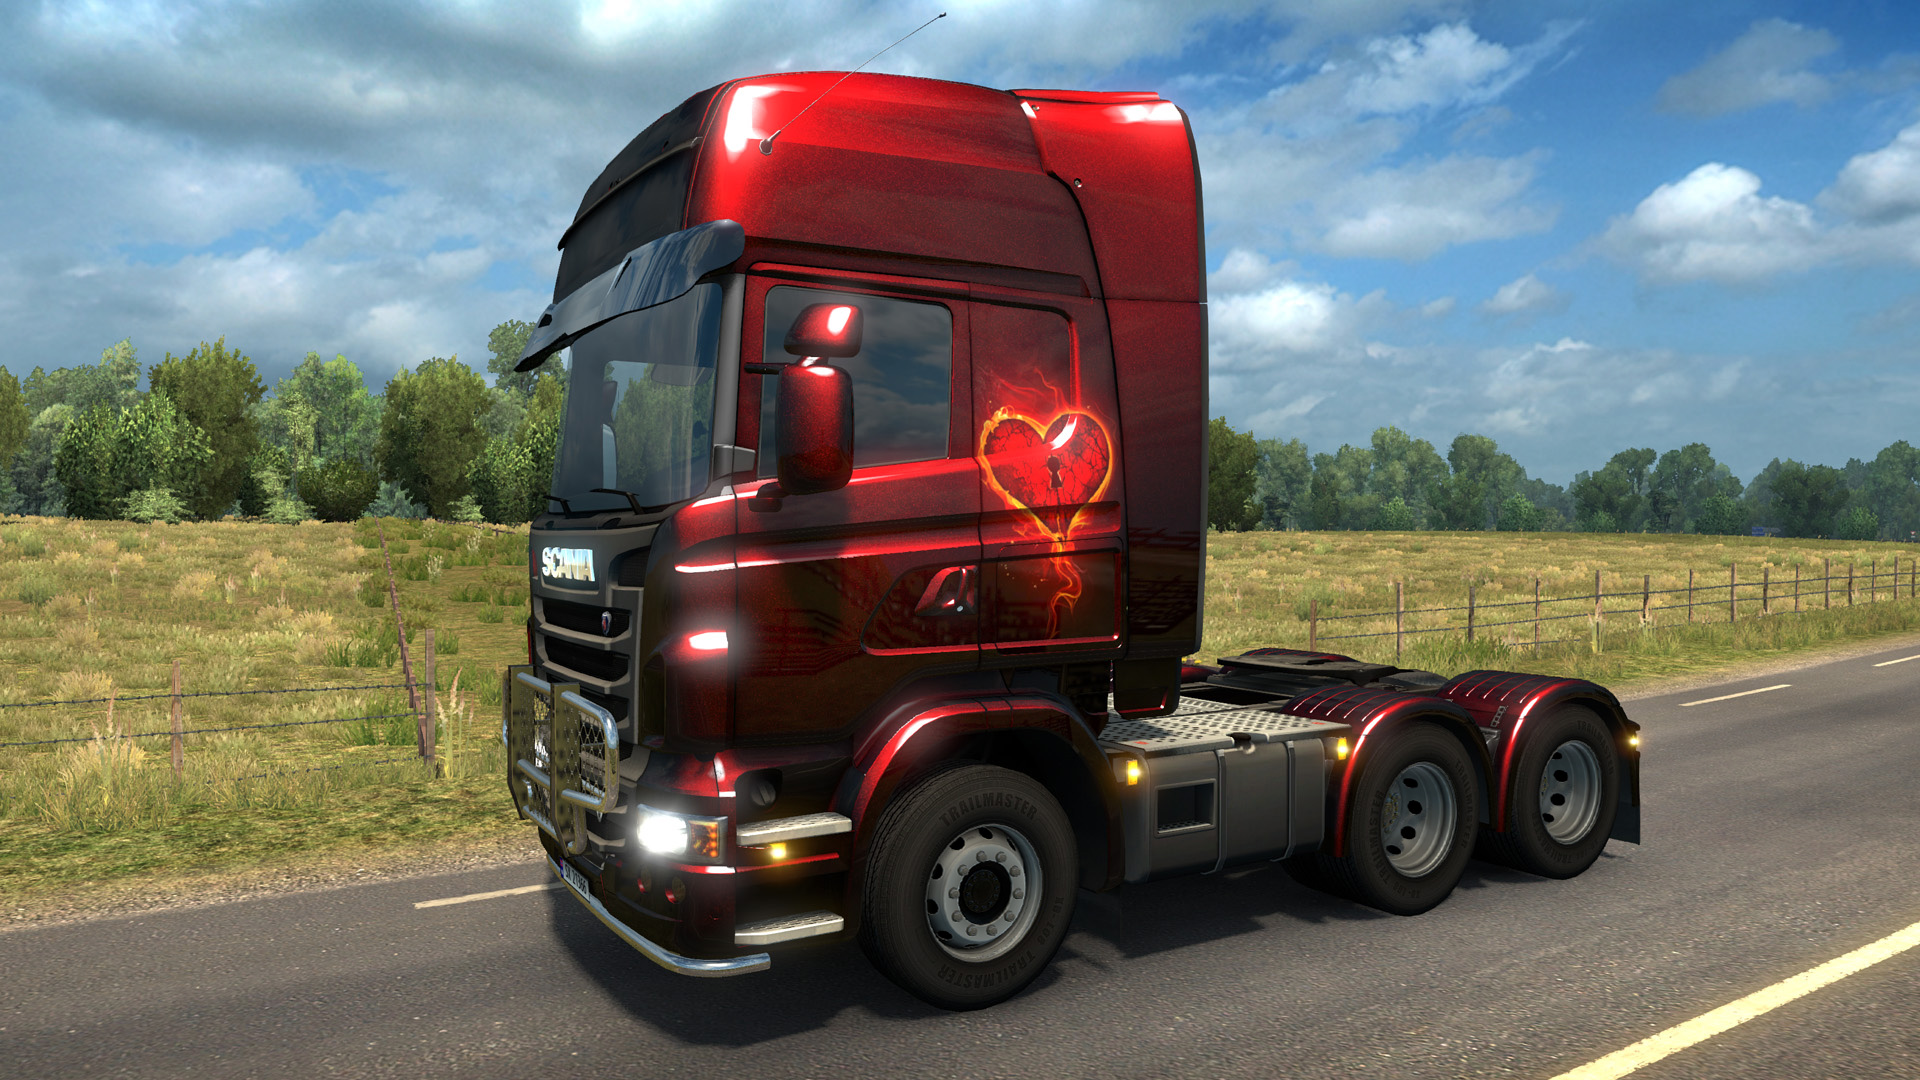 Euro truck simulator 2 - valentine